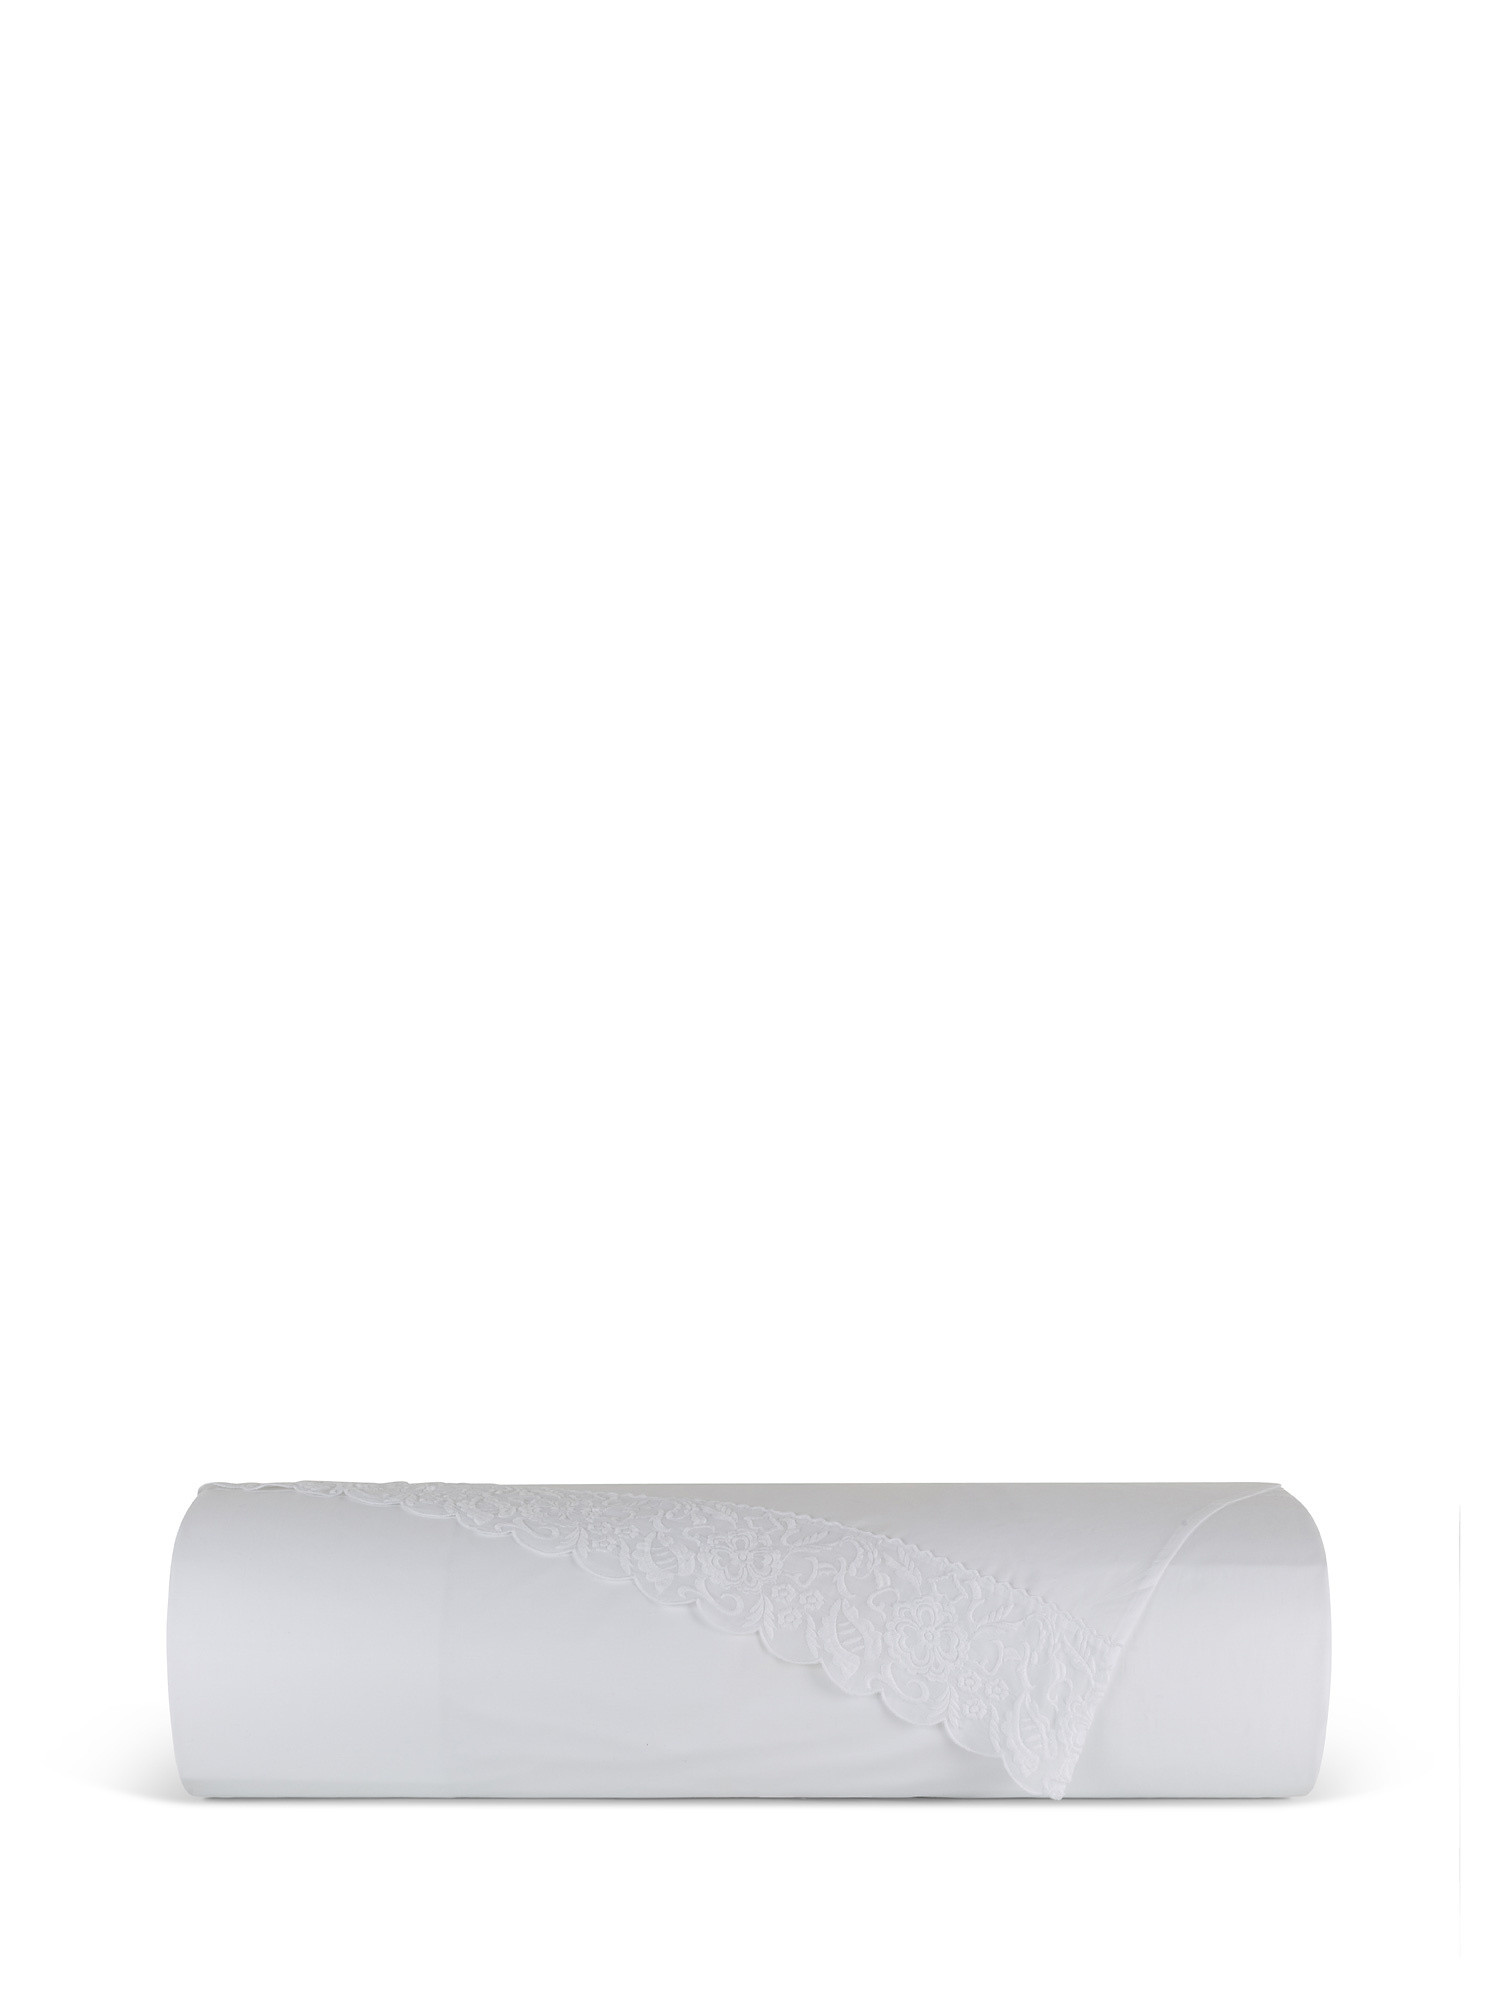 Lenzuolo liscio puro cotone percalle pizzo Portofino, Bianco, large image number 1